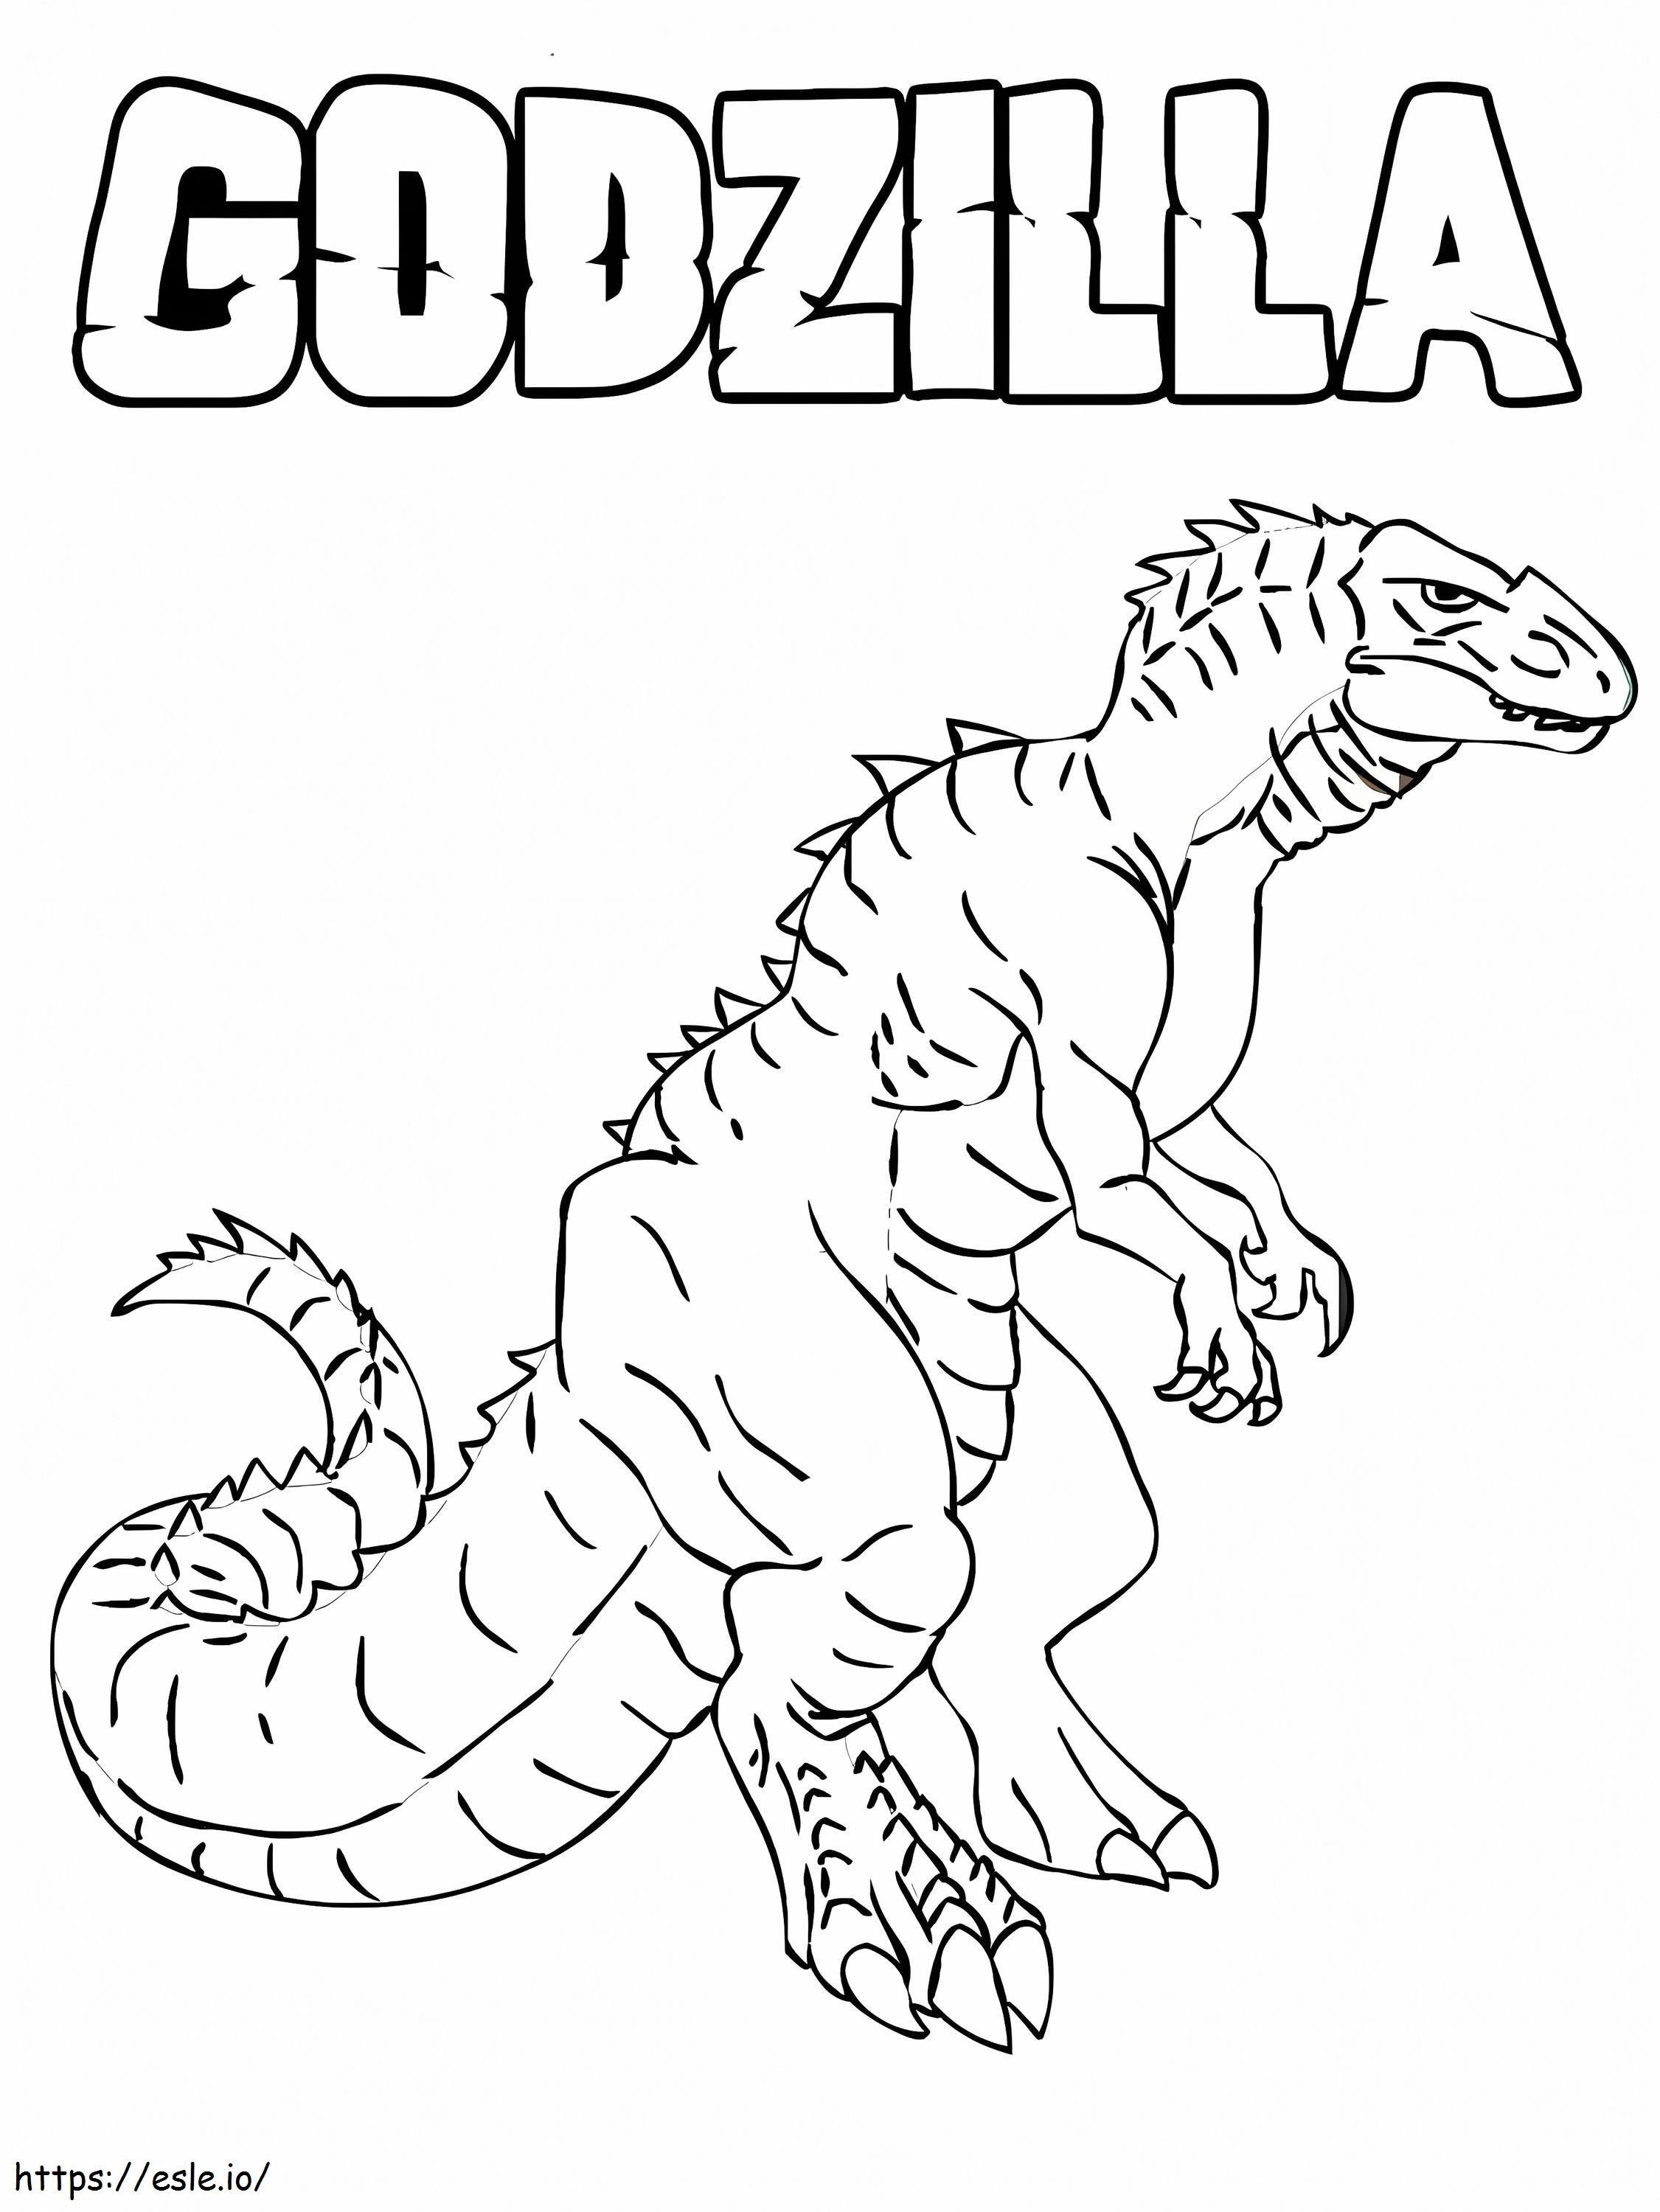 Enorme Godzilla para colorear